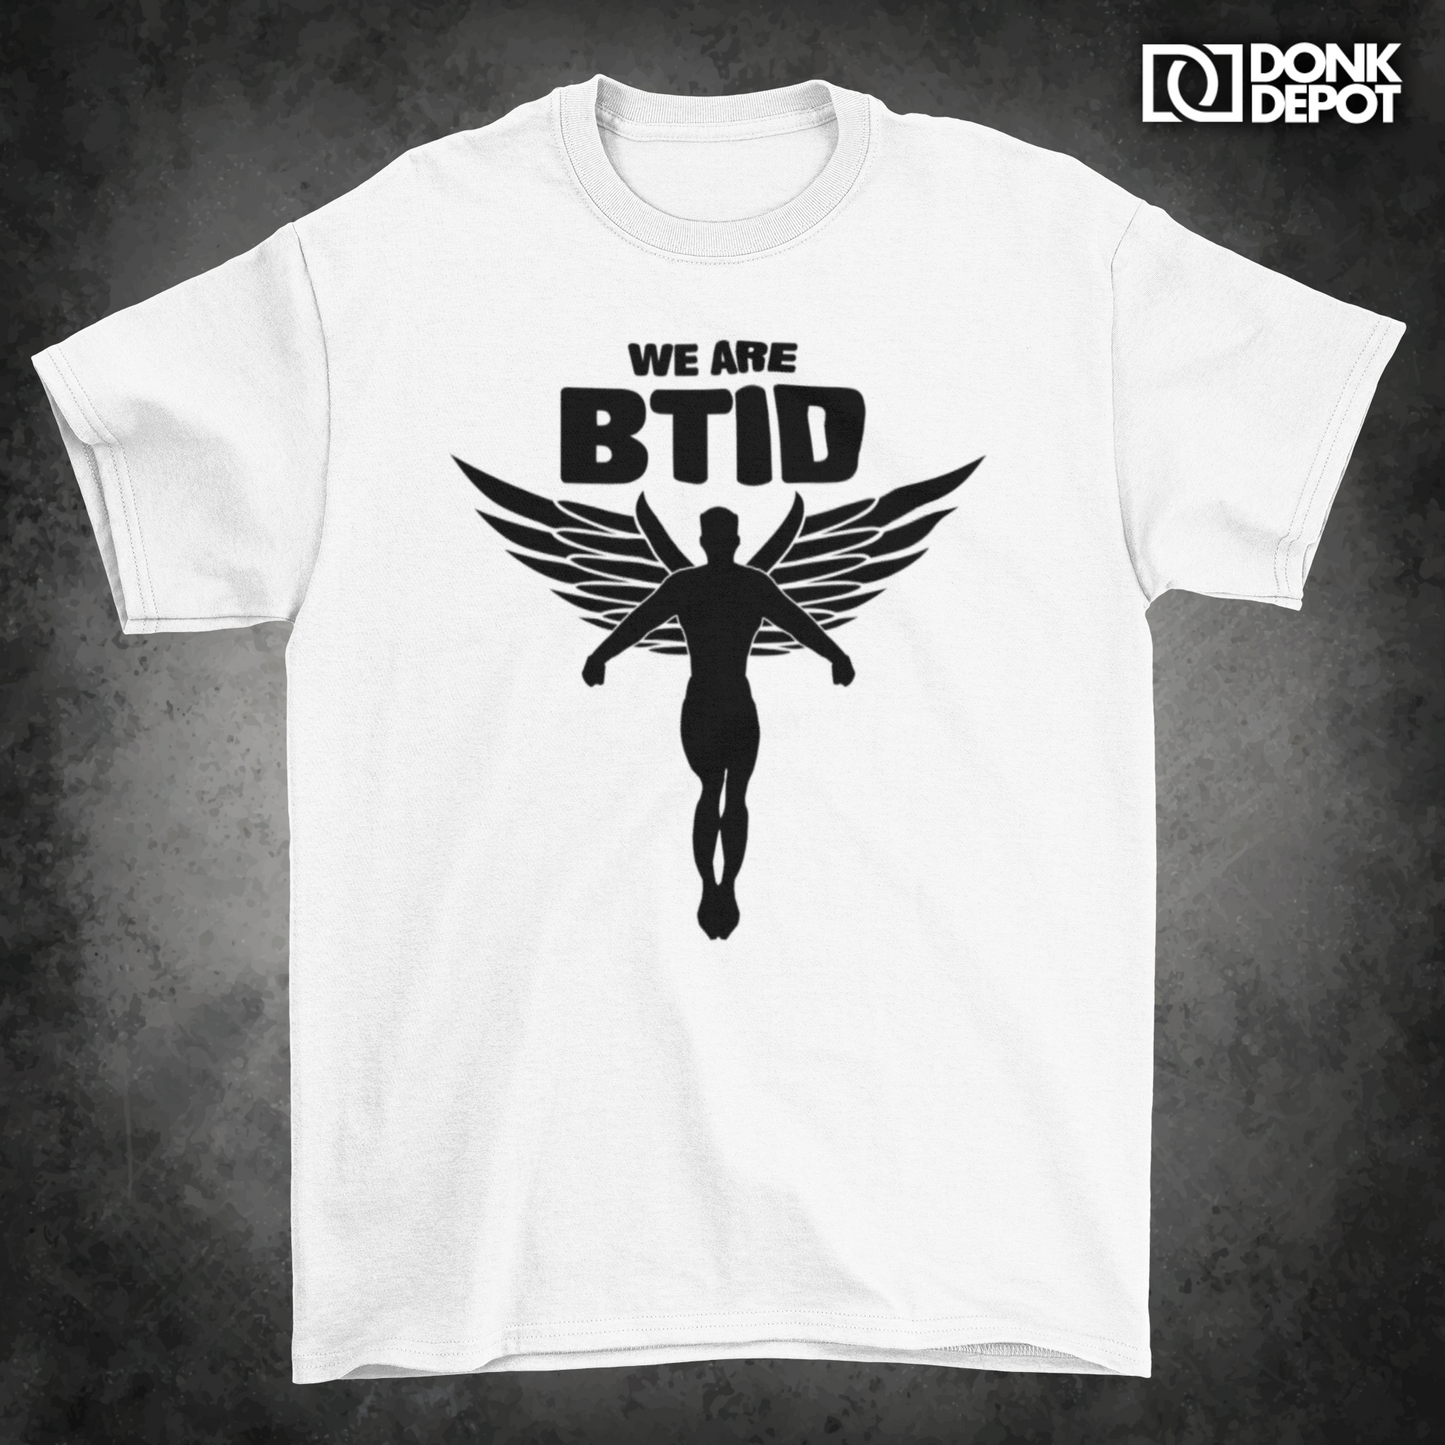 We Are BTID logo t-shirt (White)